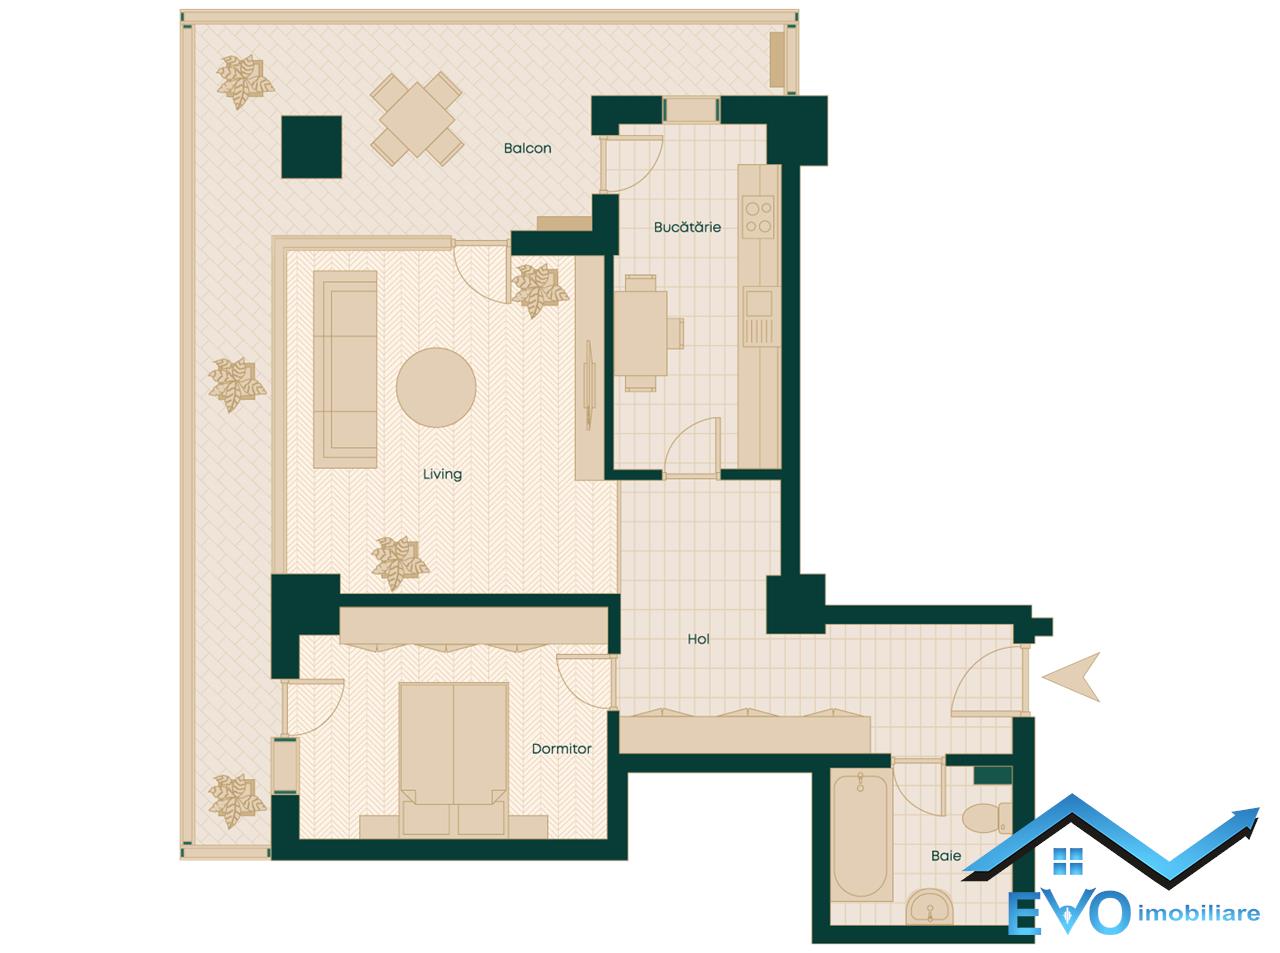 Apartament modern 2 camere, bloc nou, Podu Ros, tip 11E, 0 comision